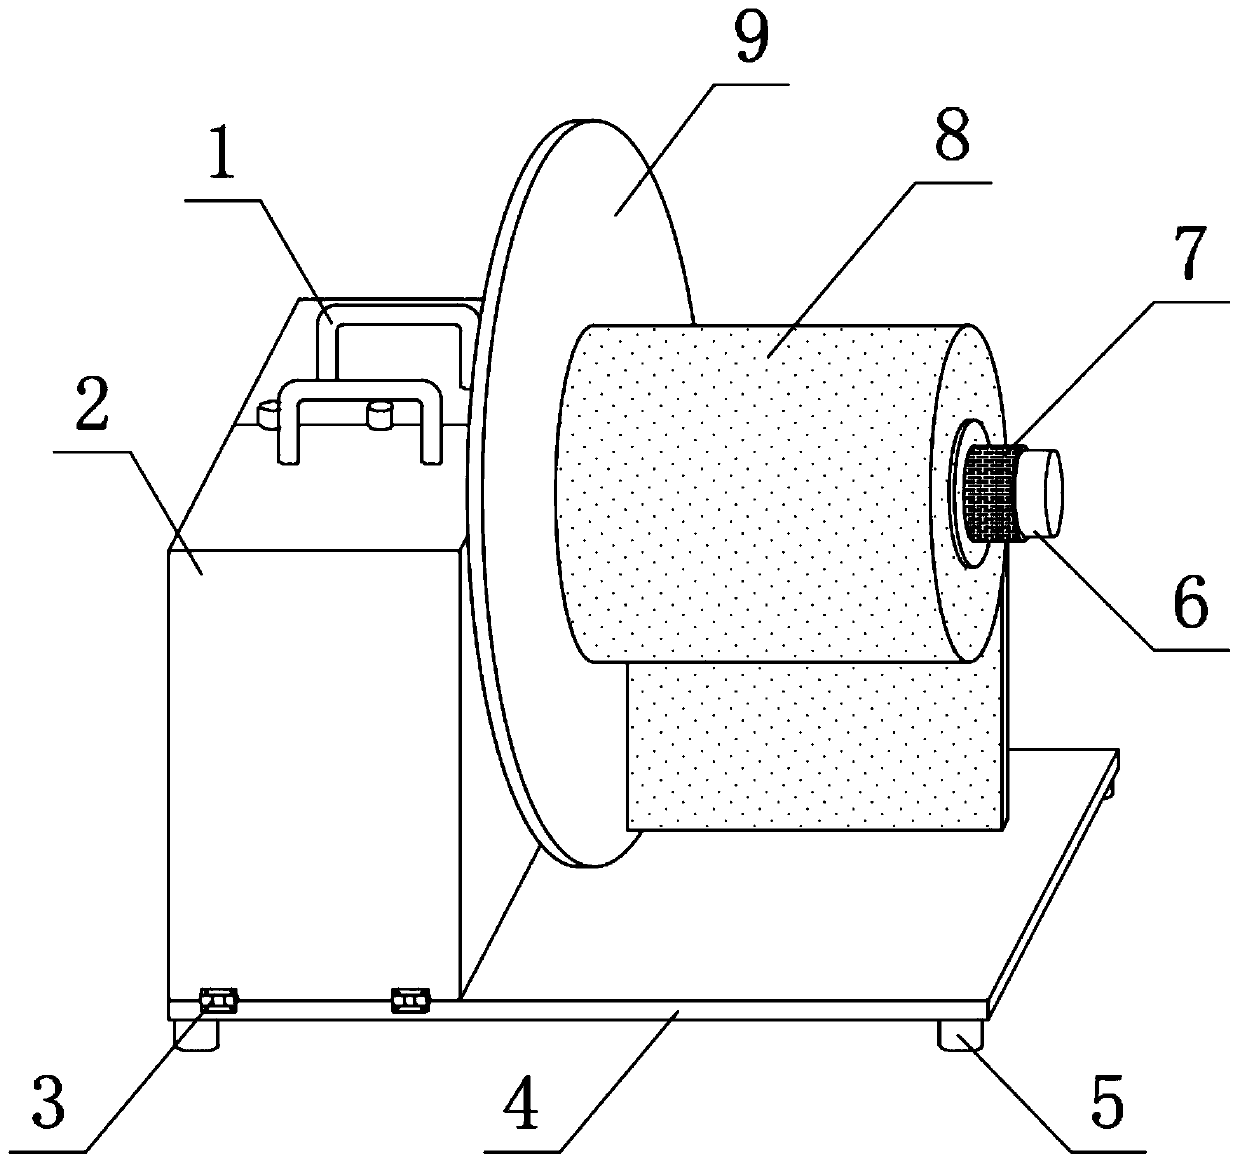 Paper winding mechanism for label digital printing machine